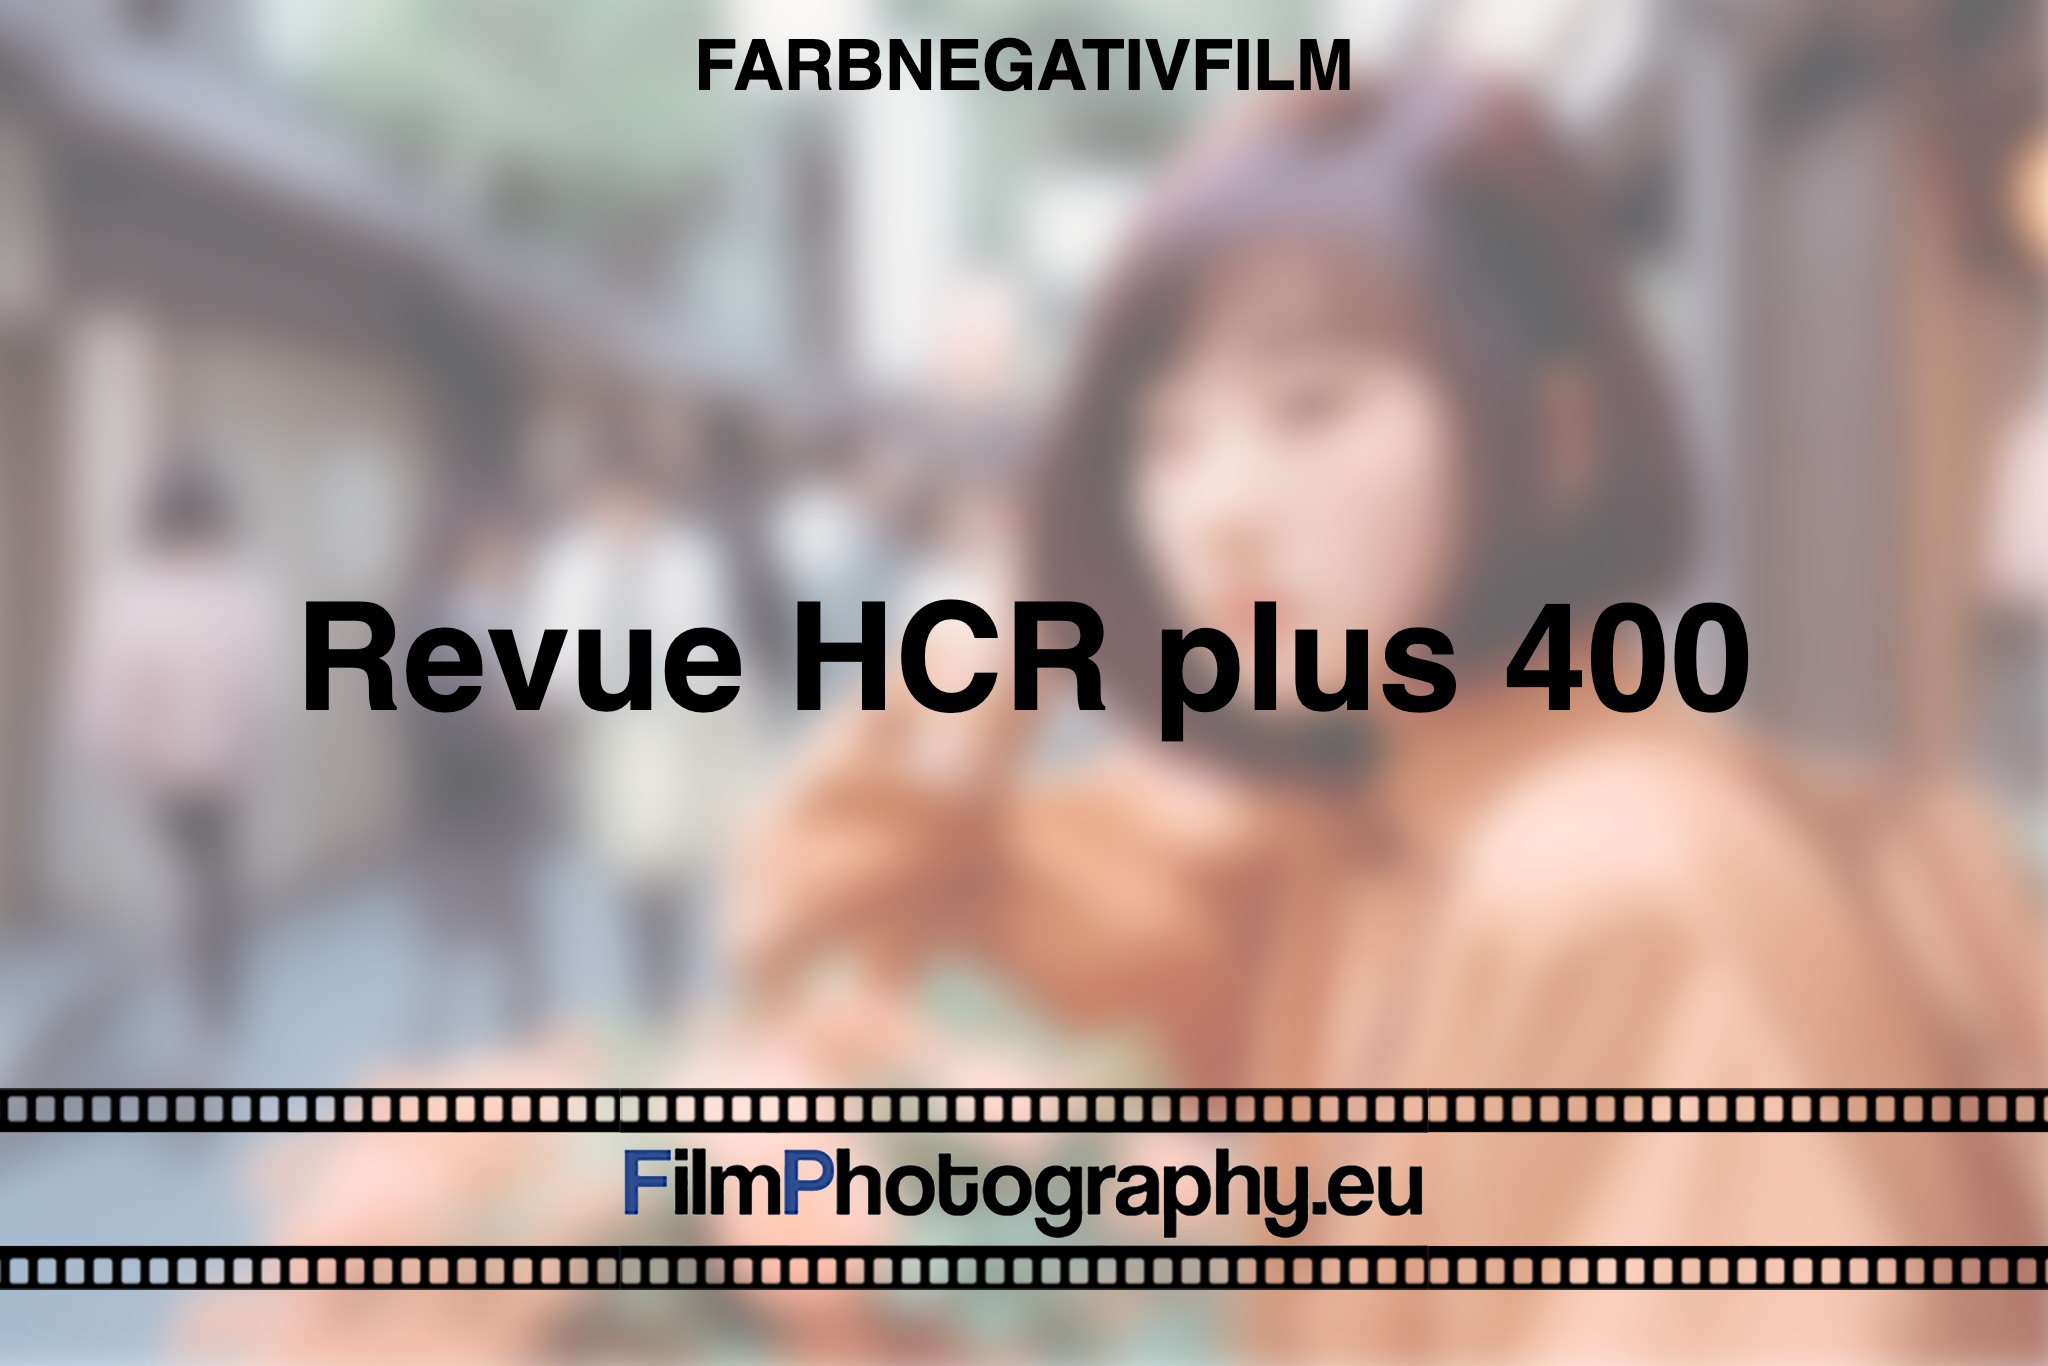 revue-hcr-plus-400-farbnegativfilm-bnv